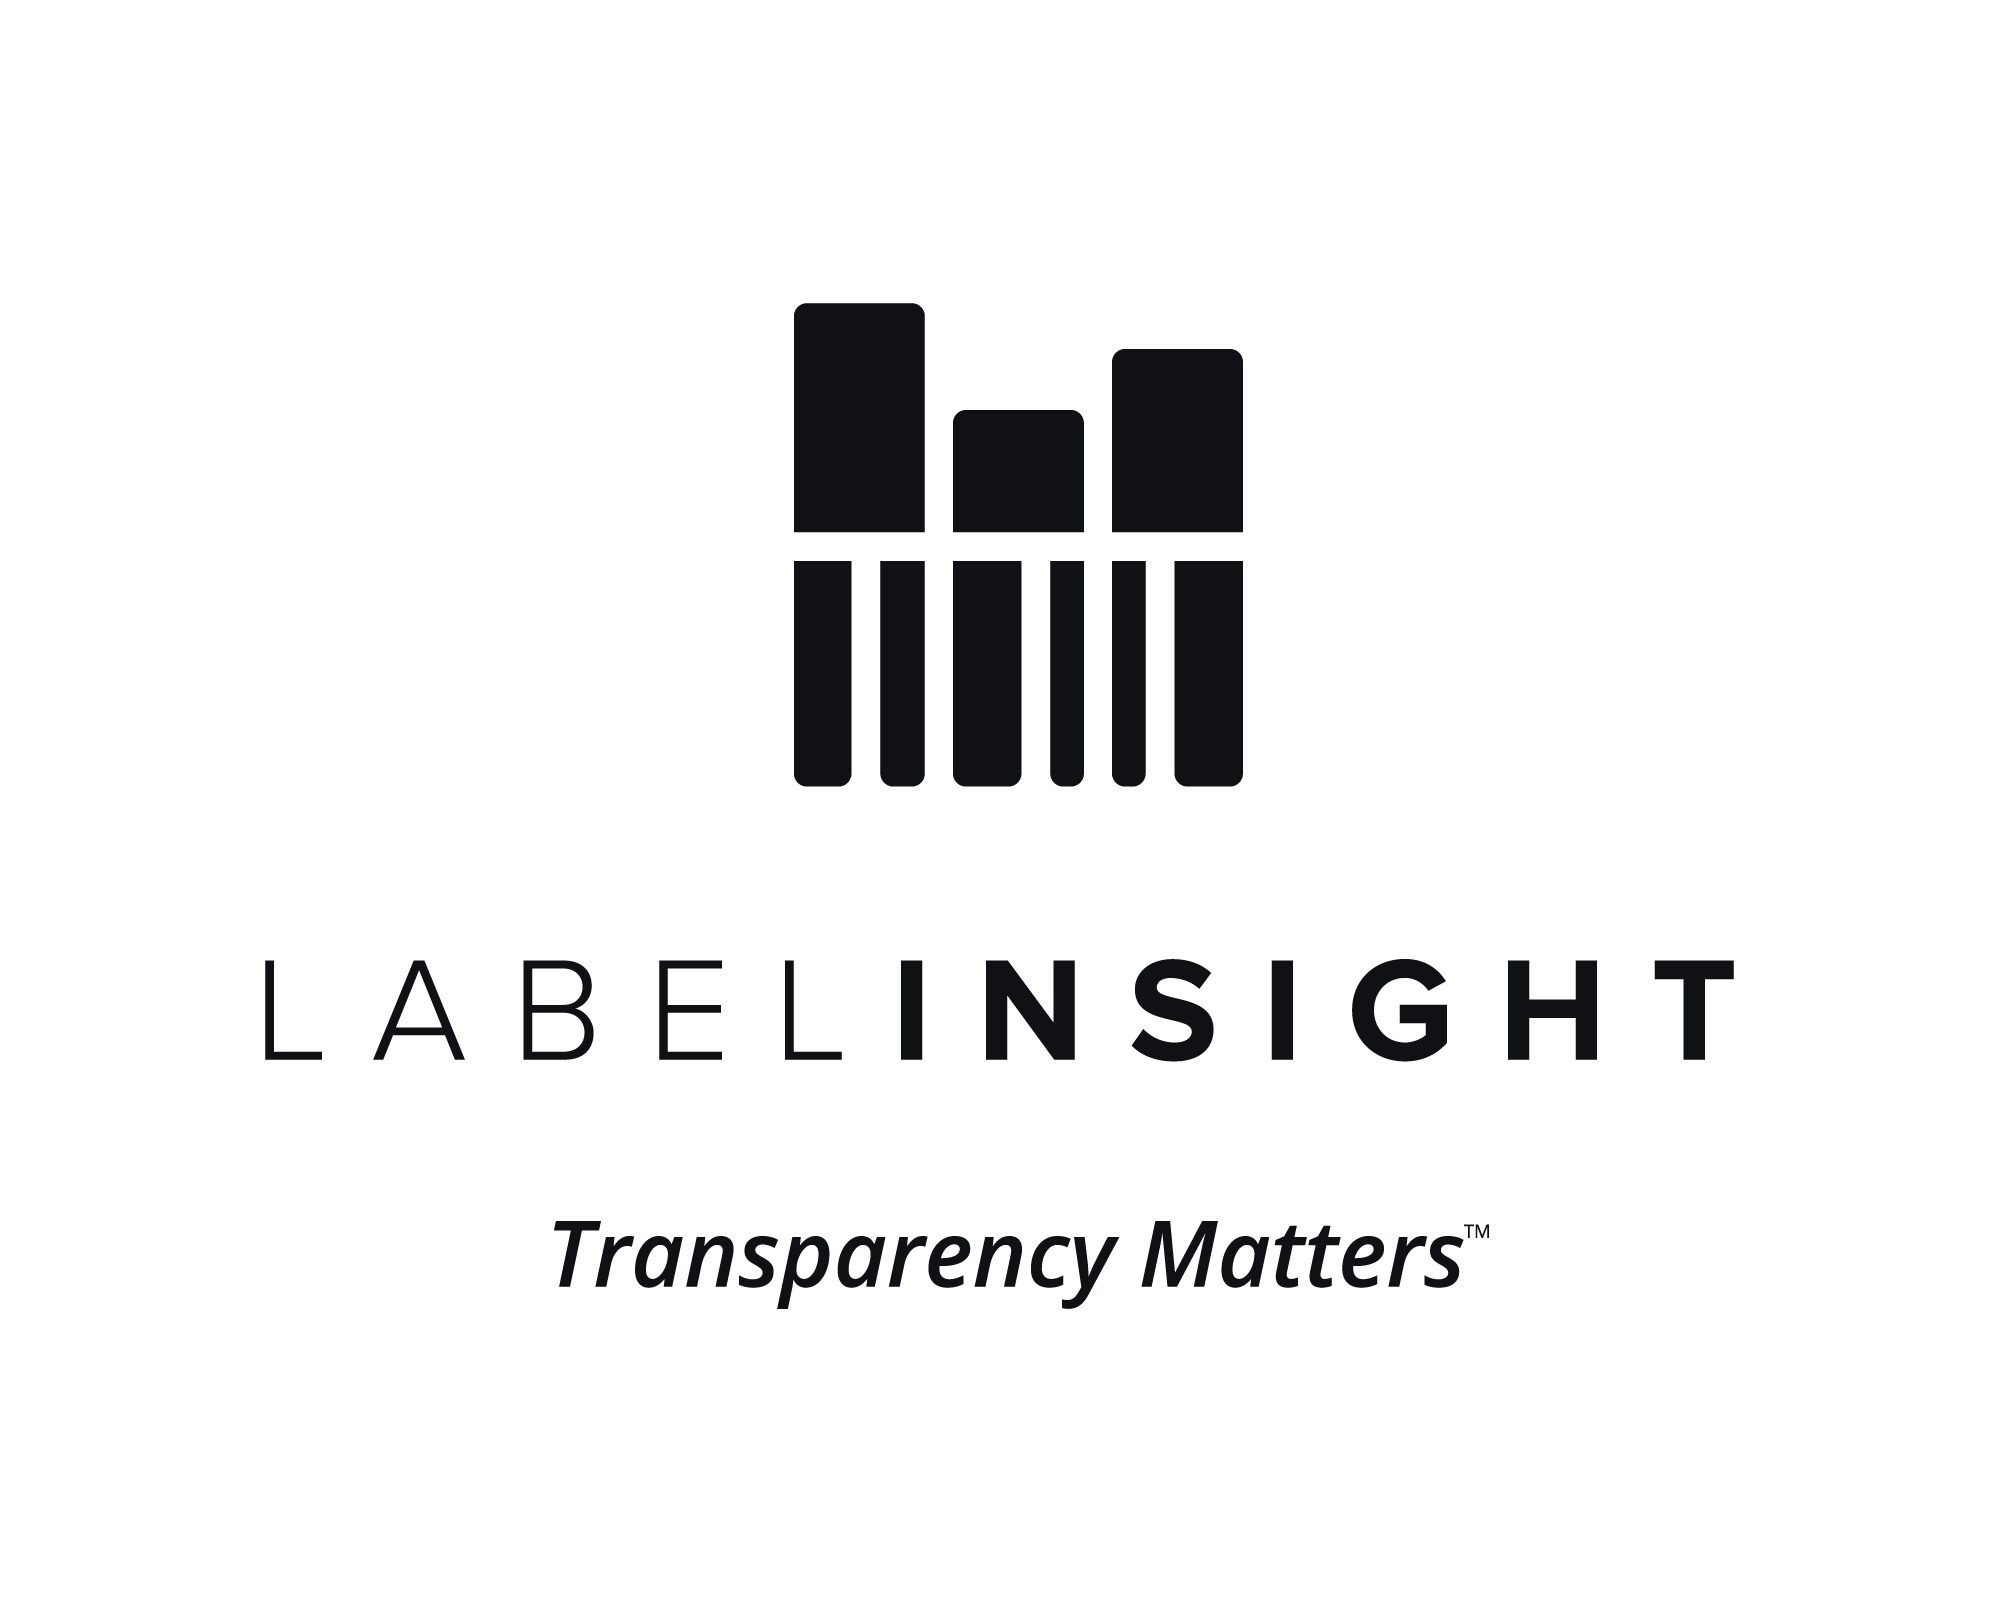 Label Insight Logo